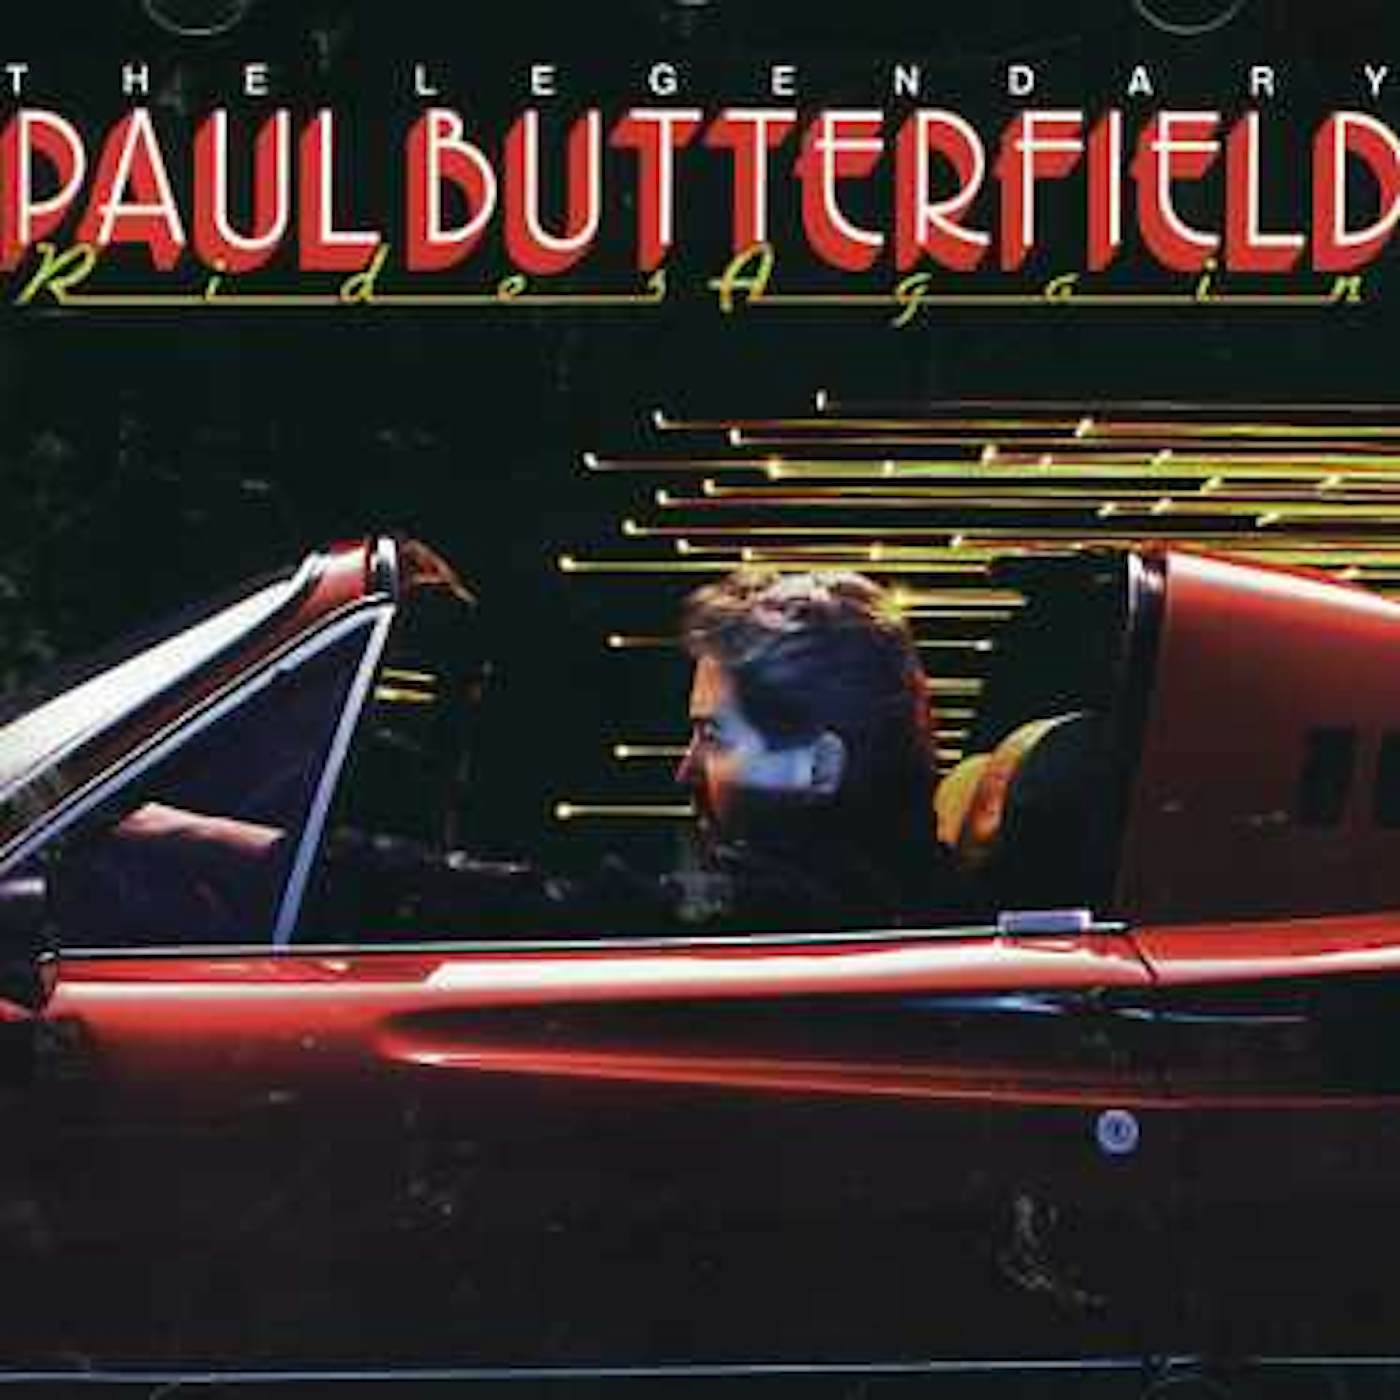 Paul Butterfield RIDES AGAIN CD